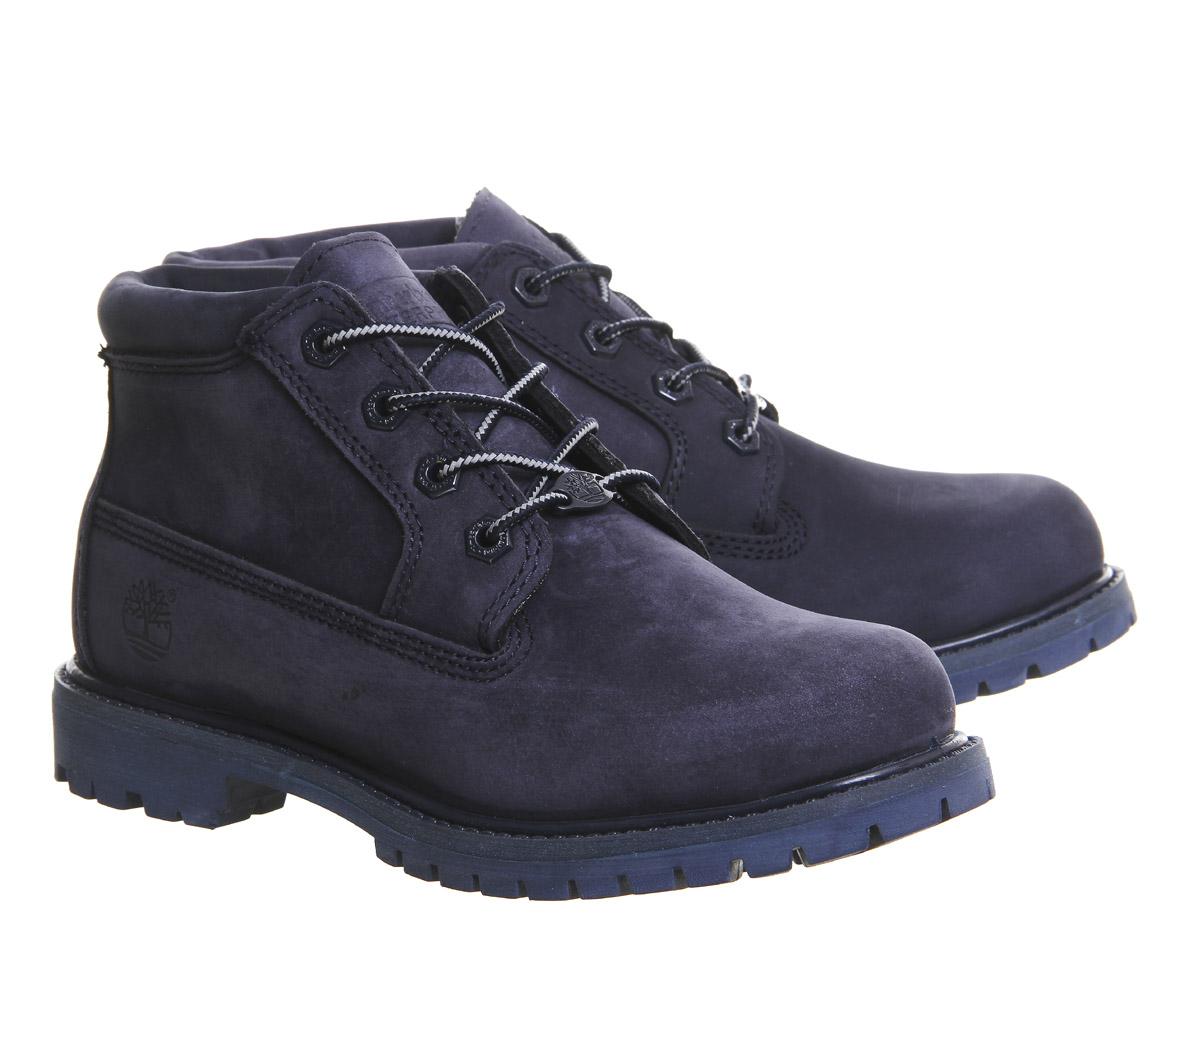 timberland boots navy blue womens